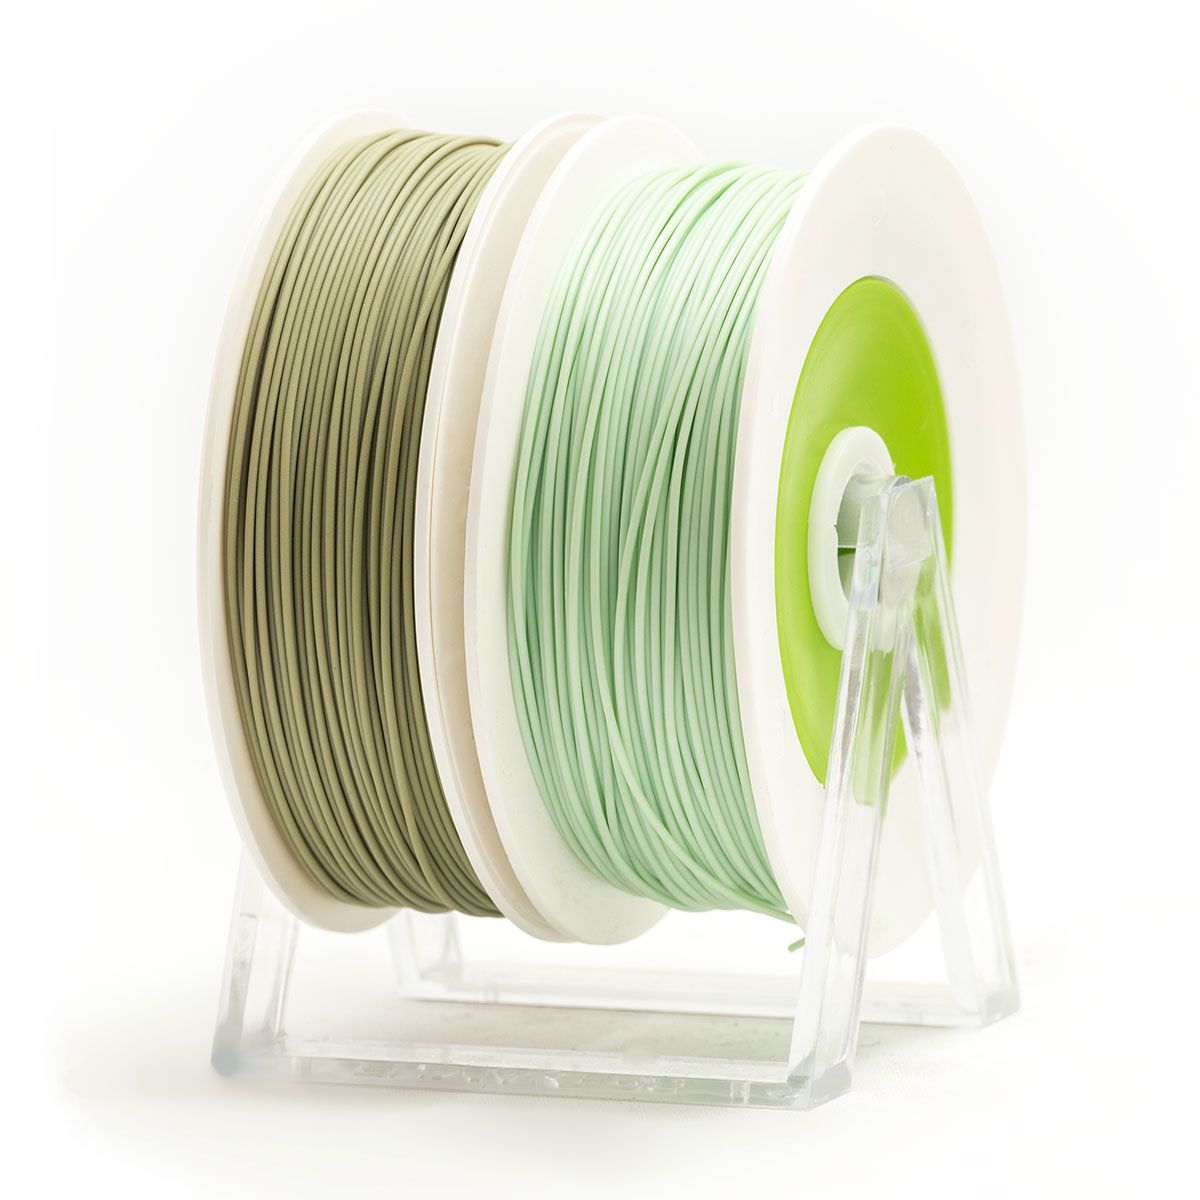 EUBIO/2Life PLA Spool Pair: Recycled Filaments